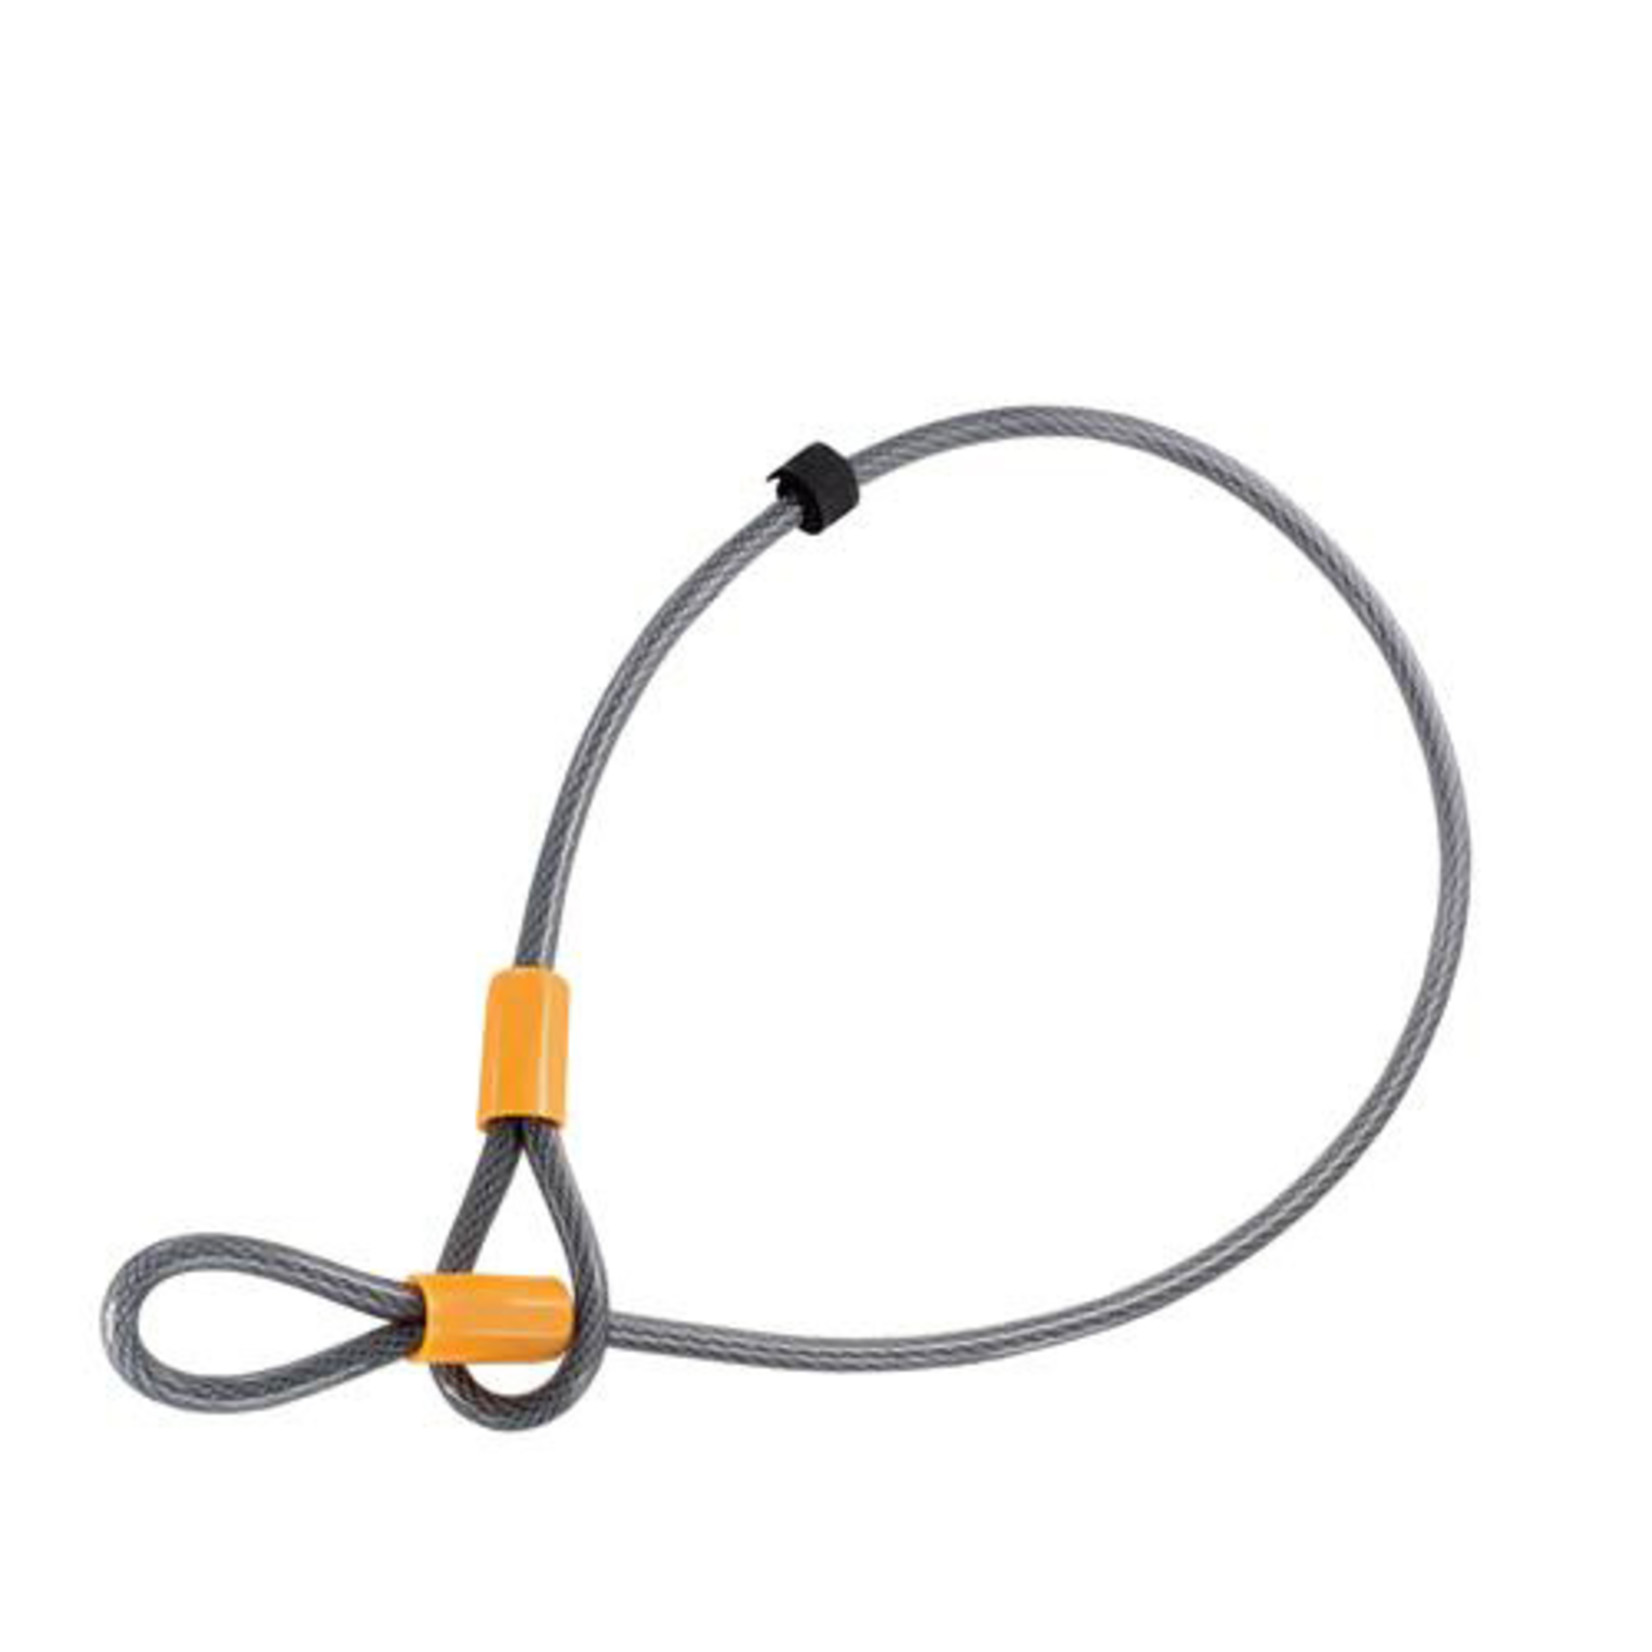 Onguard Onguard Bike Lock - Akita Series - Cable Medium - 120cm x 10mm